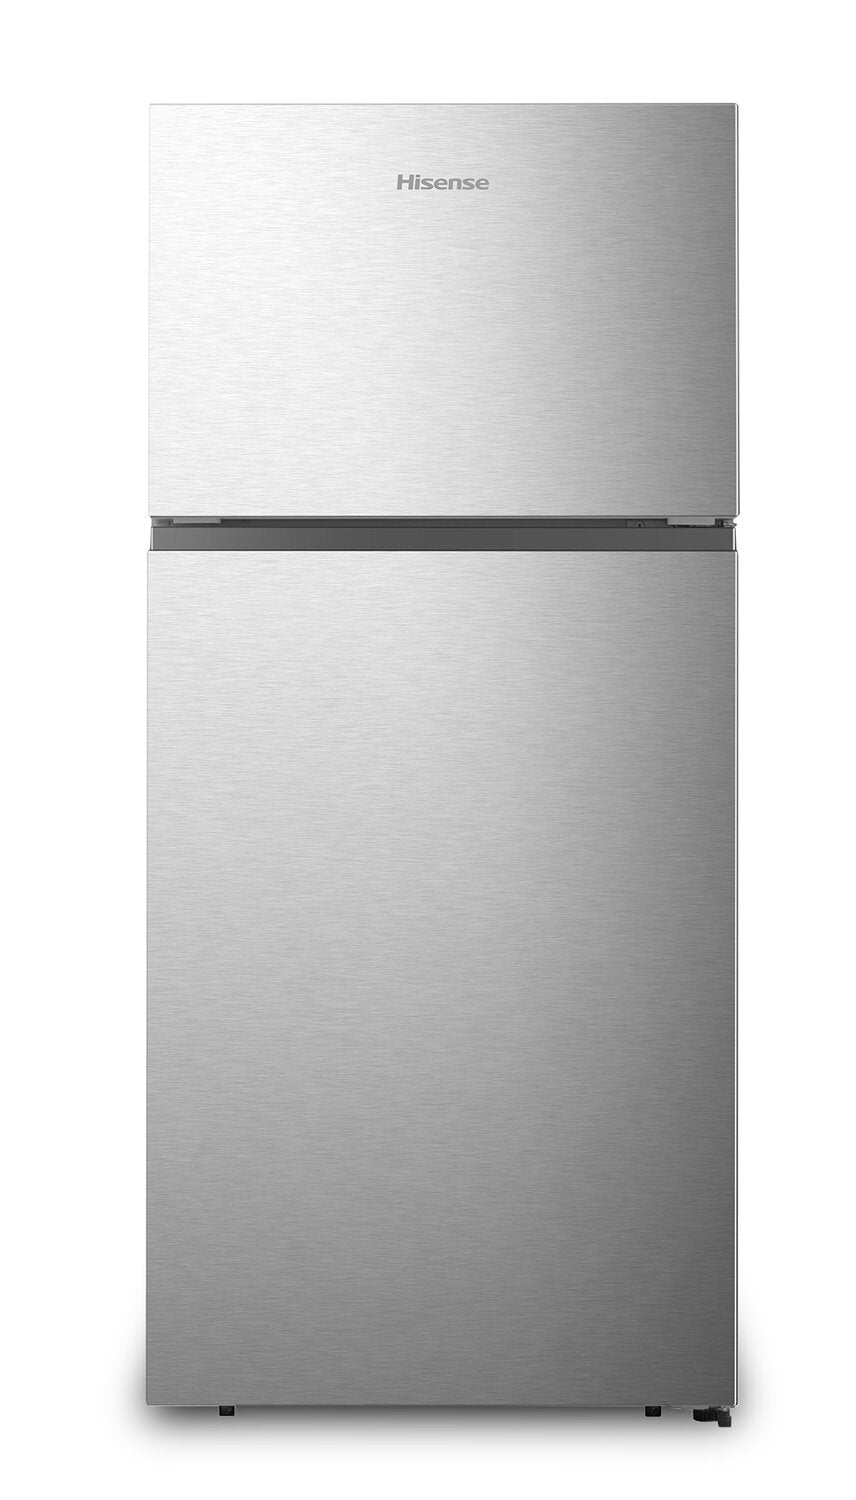 Hisense Appliances | Refrigerators & Electric Ranges | The Brick